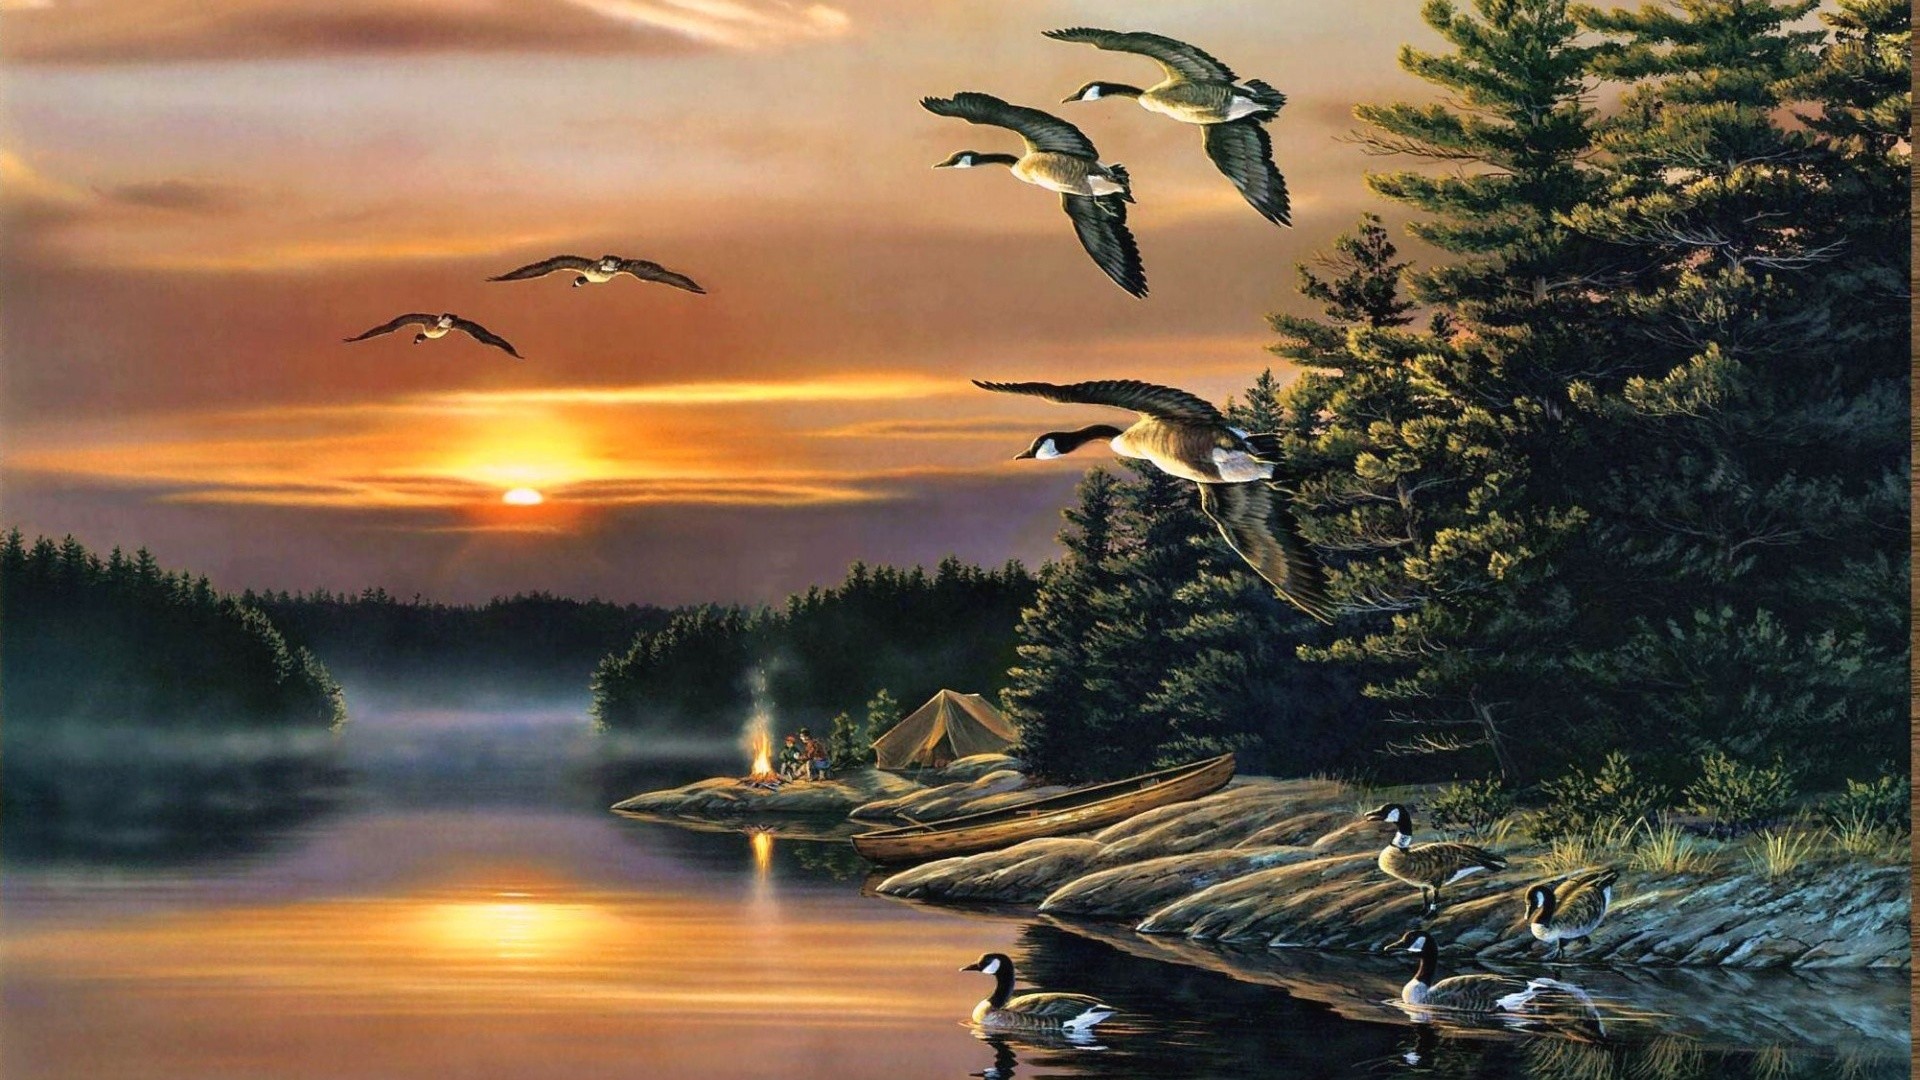 1920x1080  Wood Camping Lake Ducks Sunset